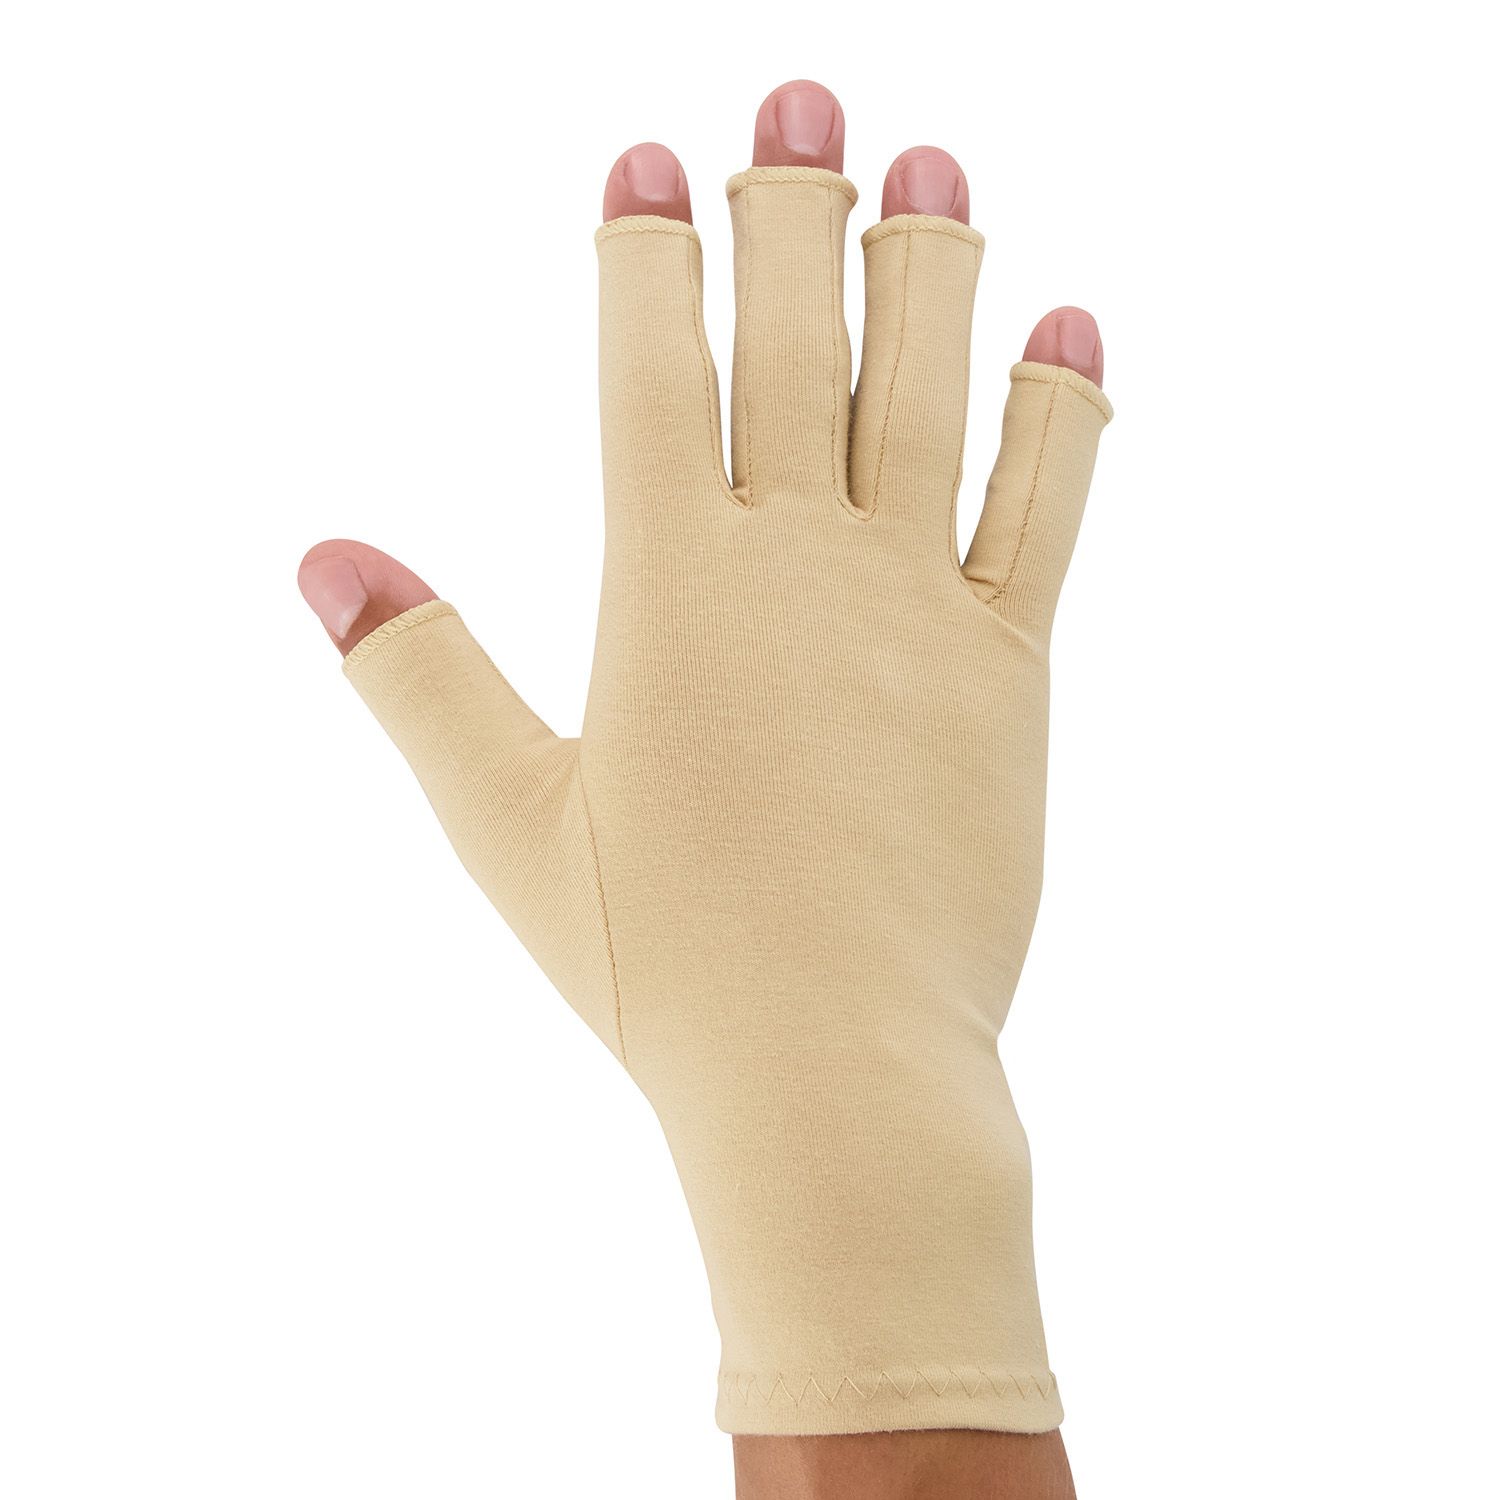 dunimed rheumatoid arthritis osteoarthritis gloves material explanation